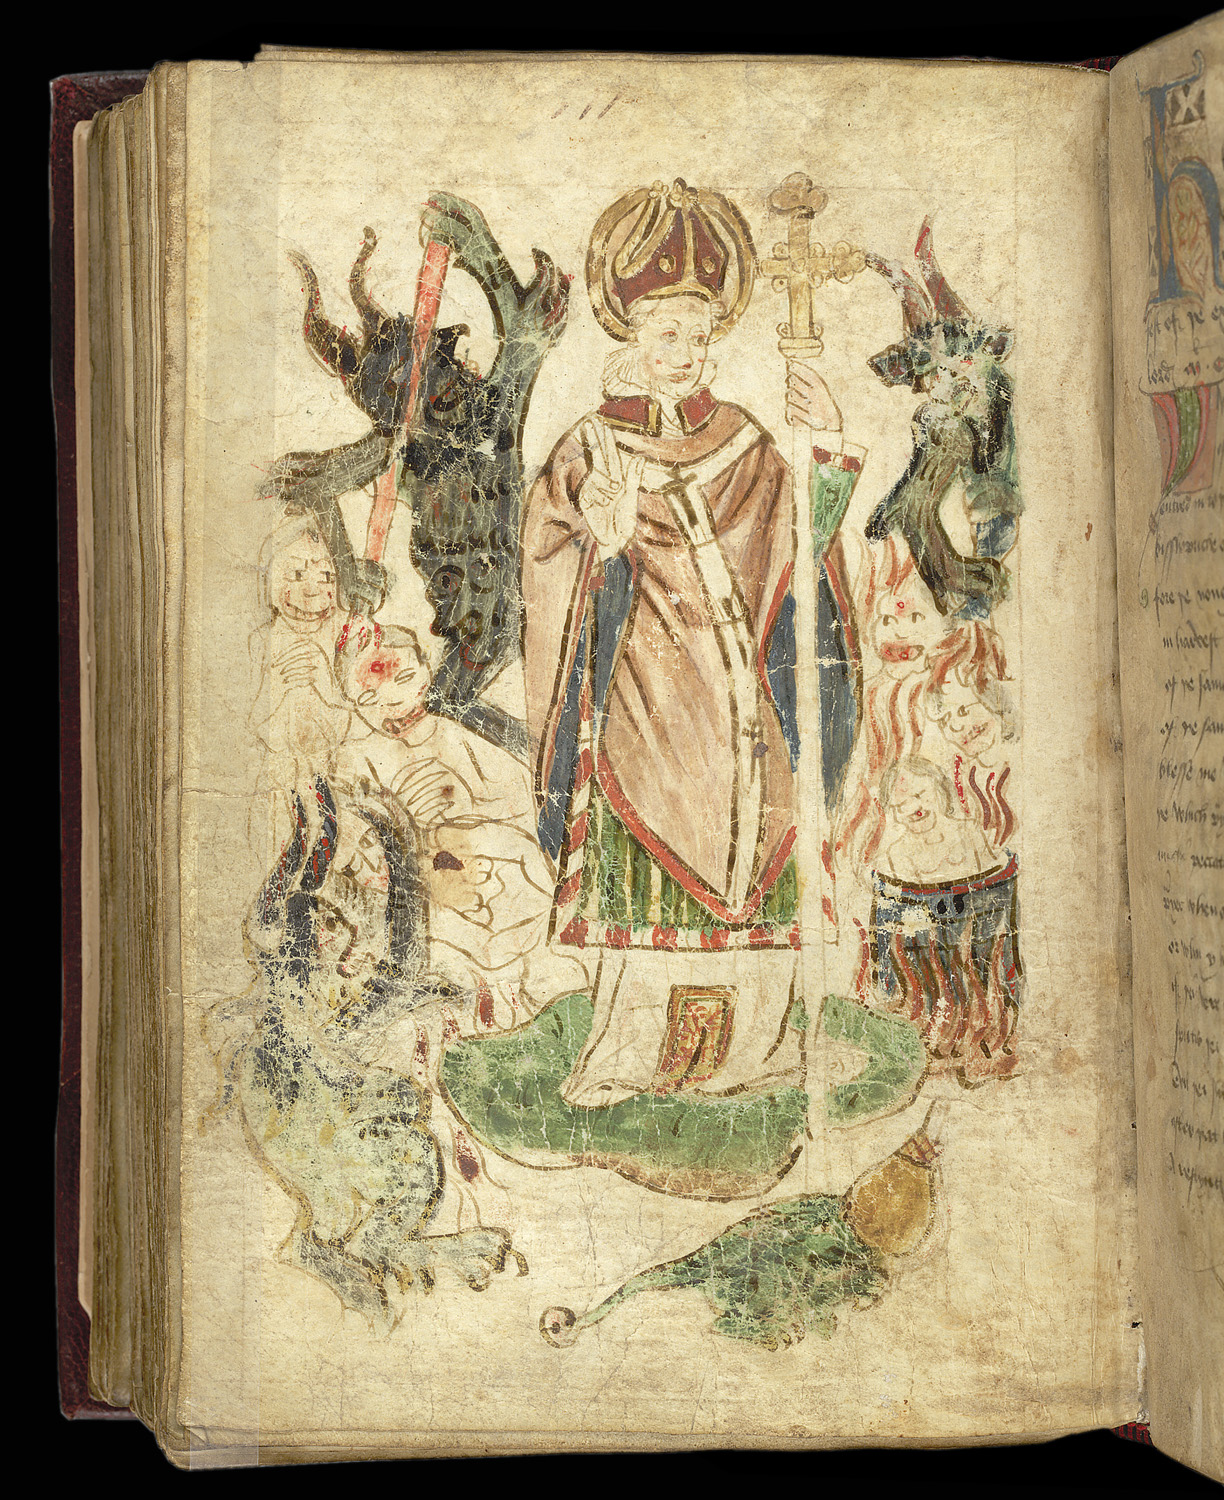 St Patrick standing on a snake in Purgatory, England, 1451 (London, British Library, MS Royal 17 B XLIII, f 132v)